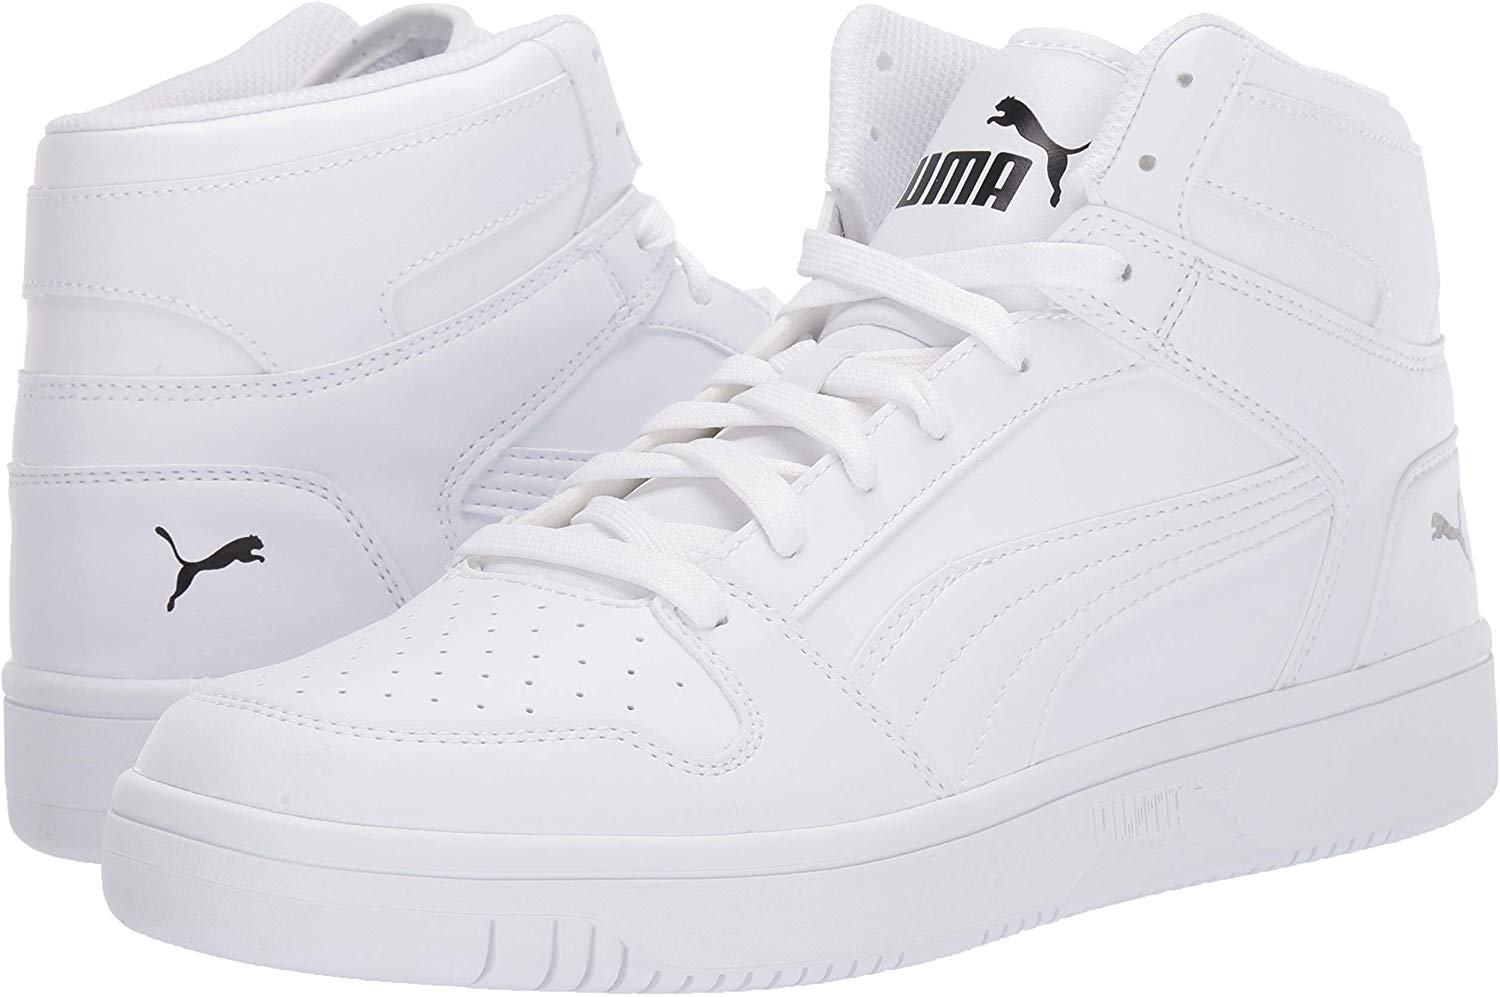 PUMA Men's Rebound Layup Sneaker, White/Black, Size 7.0 tuJk | eBay